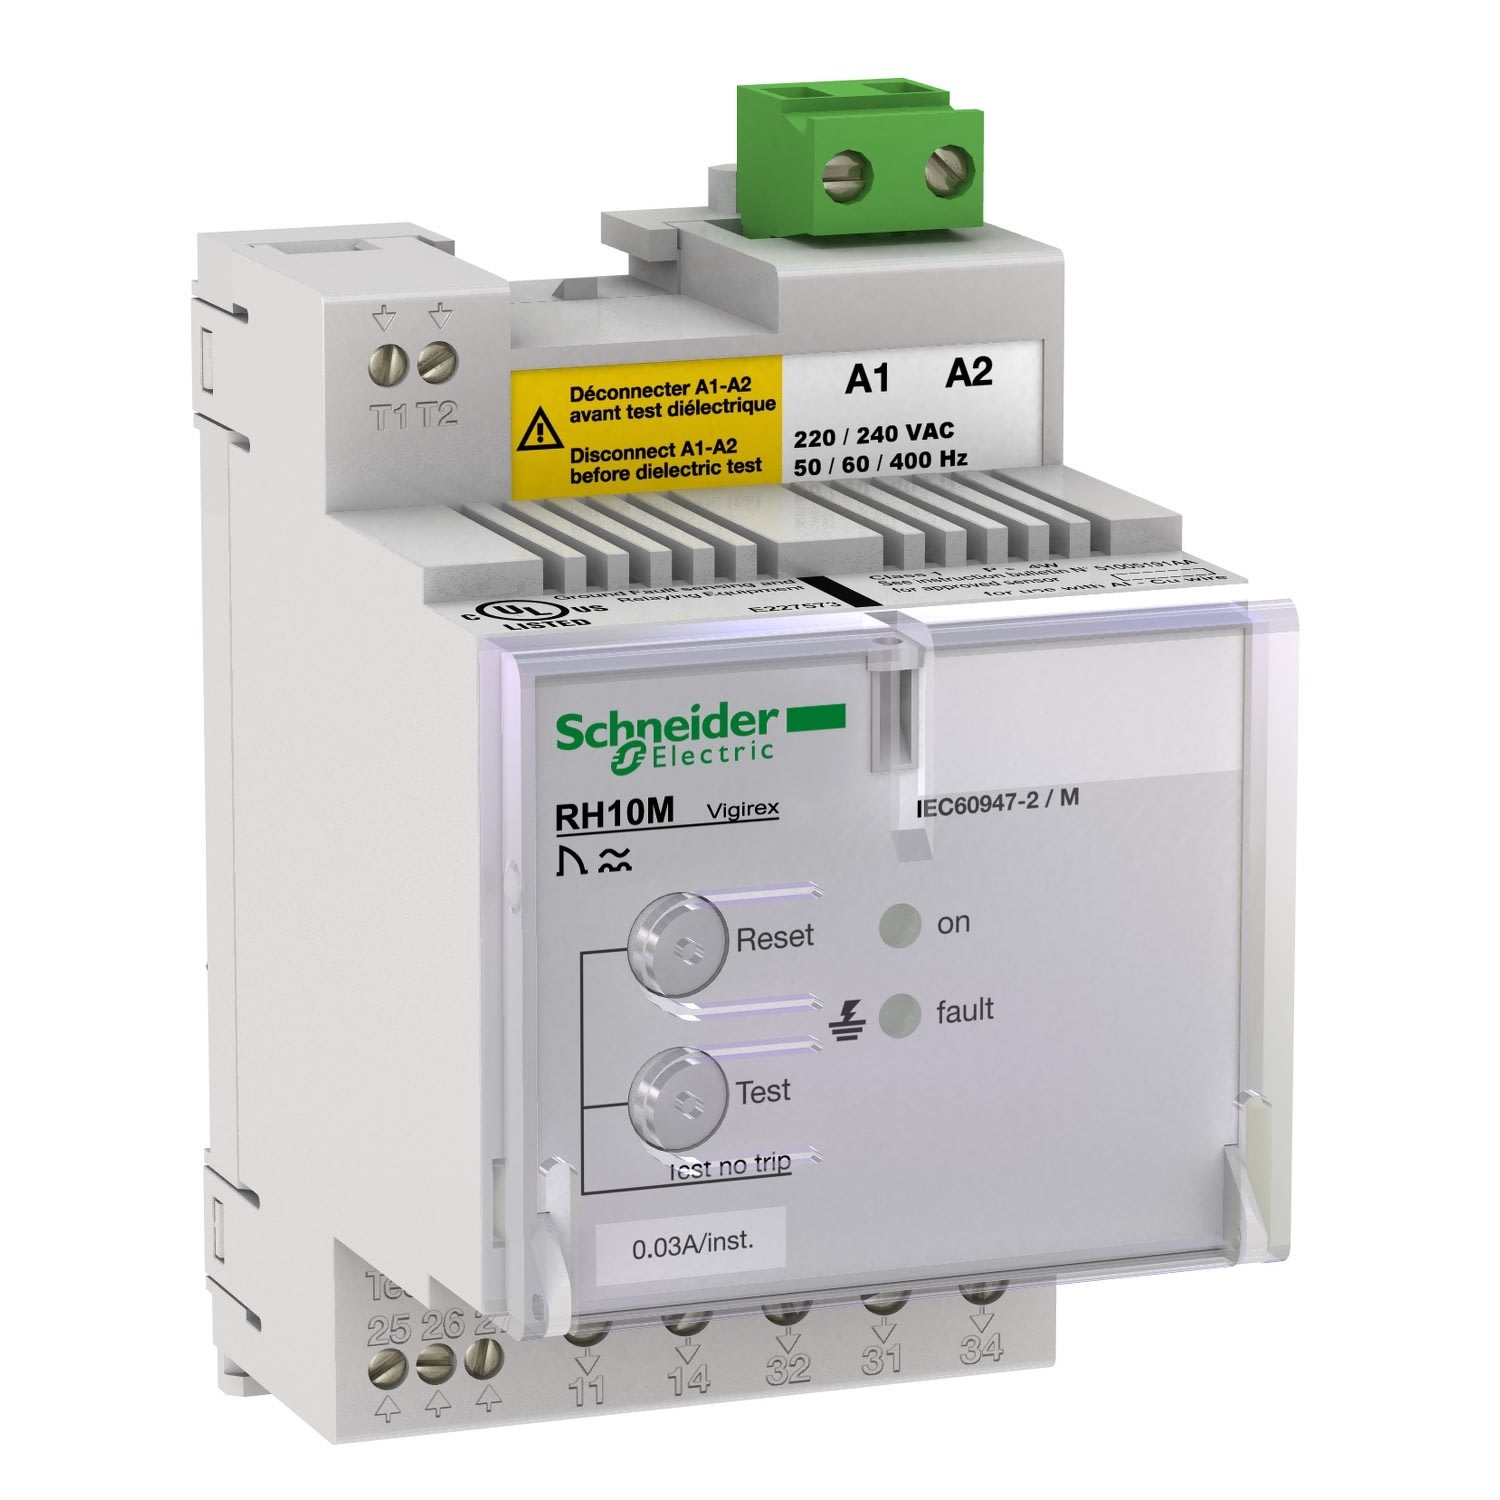 Schneider Electric - Vigirex RH10M 220-240VAC sensibilite 0,03A instantane